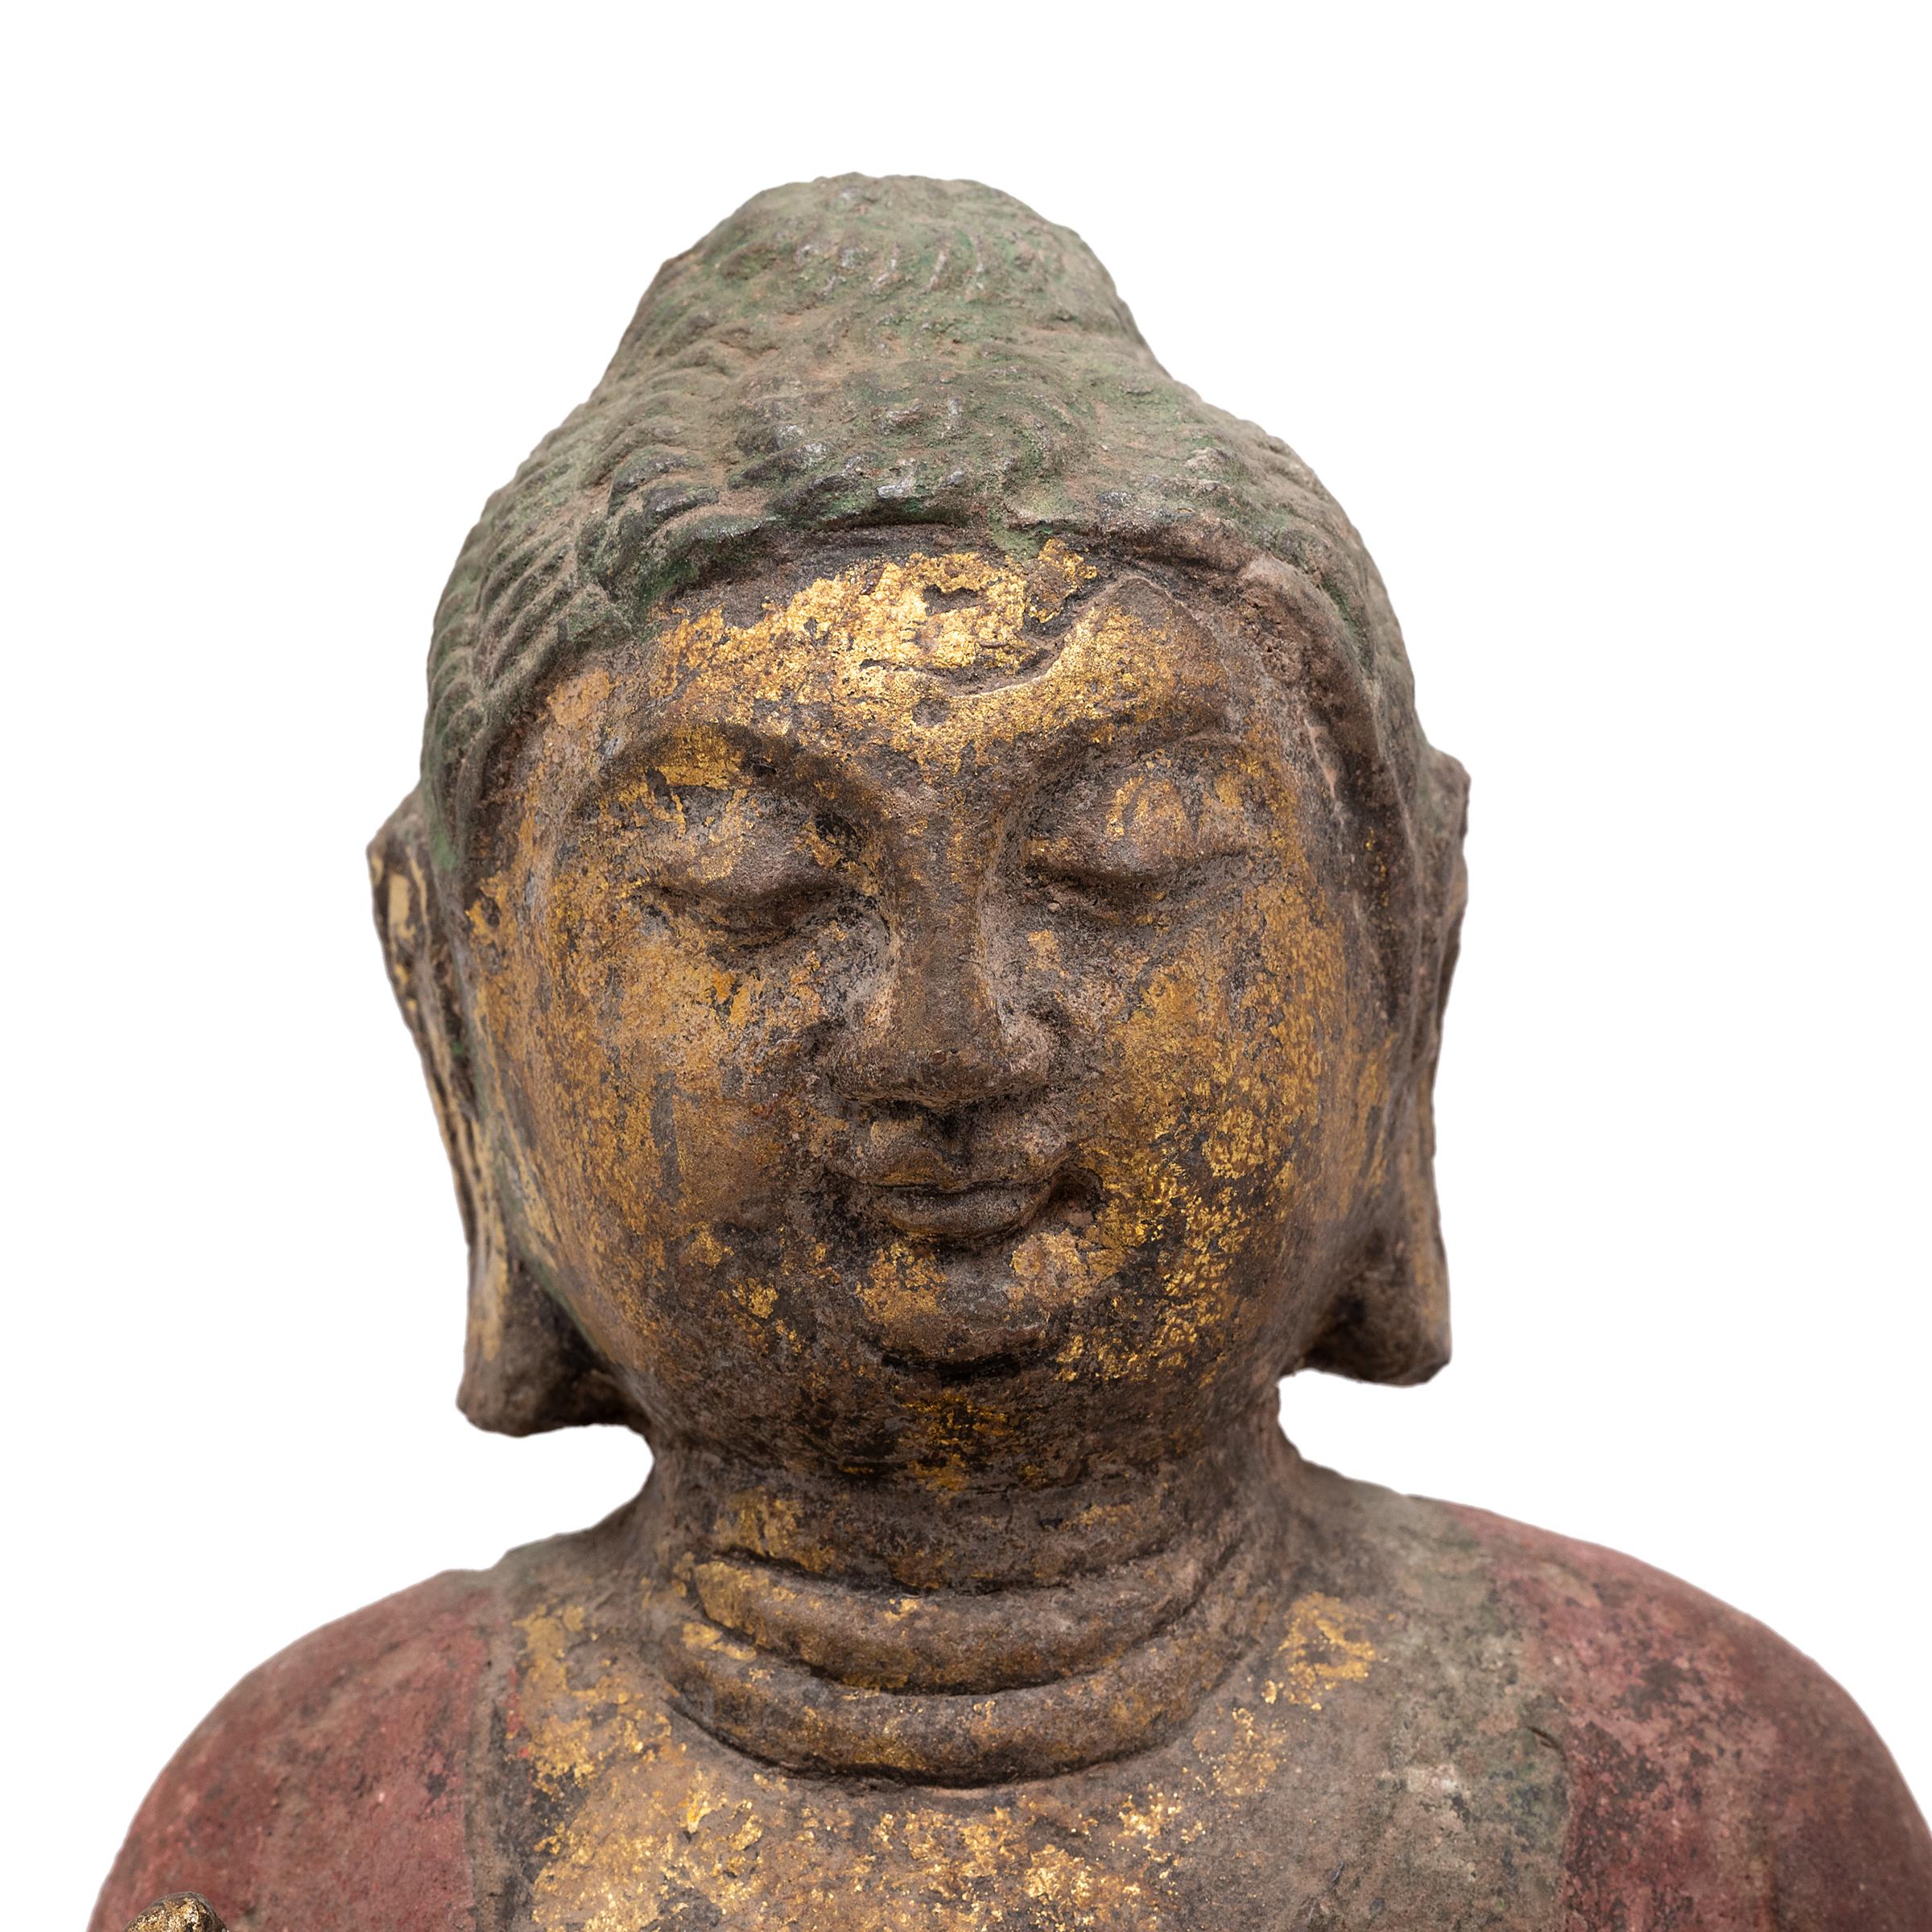 20th Century Chinese Polychrome Stone Seated Buddha, c. 1900